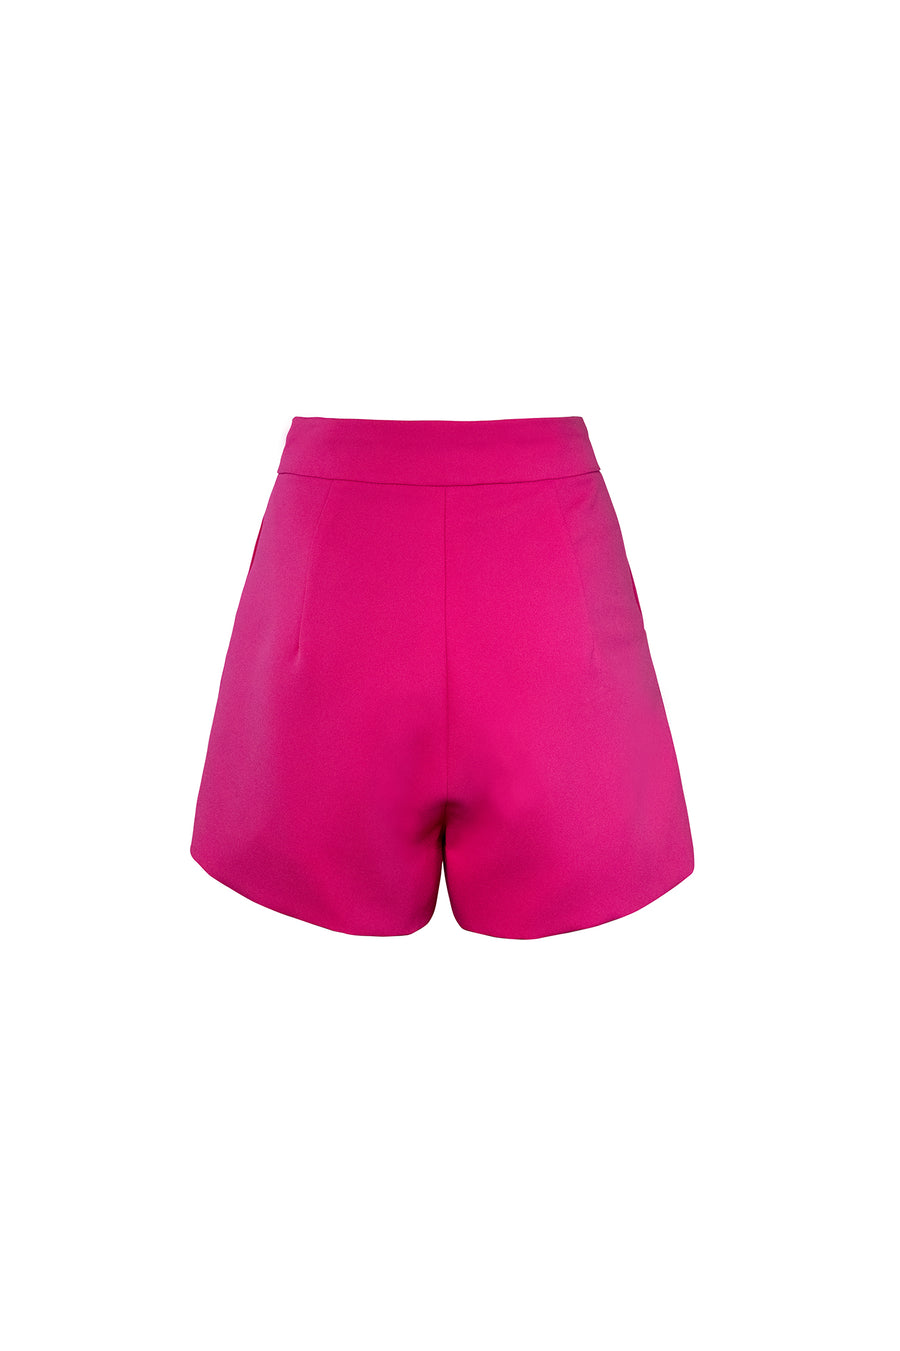 Hot Pink Crop Top / Hot Pink Shorts